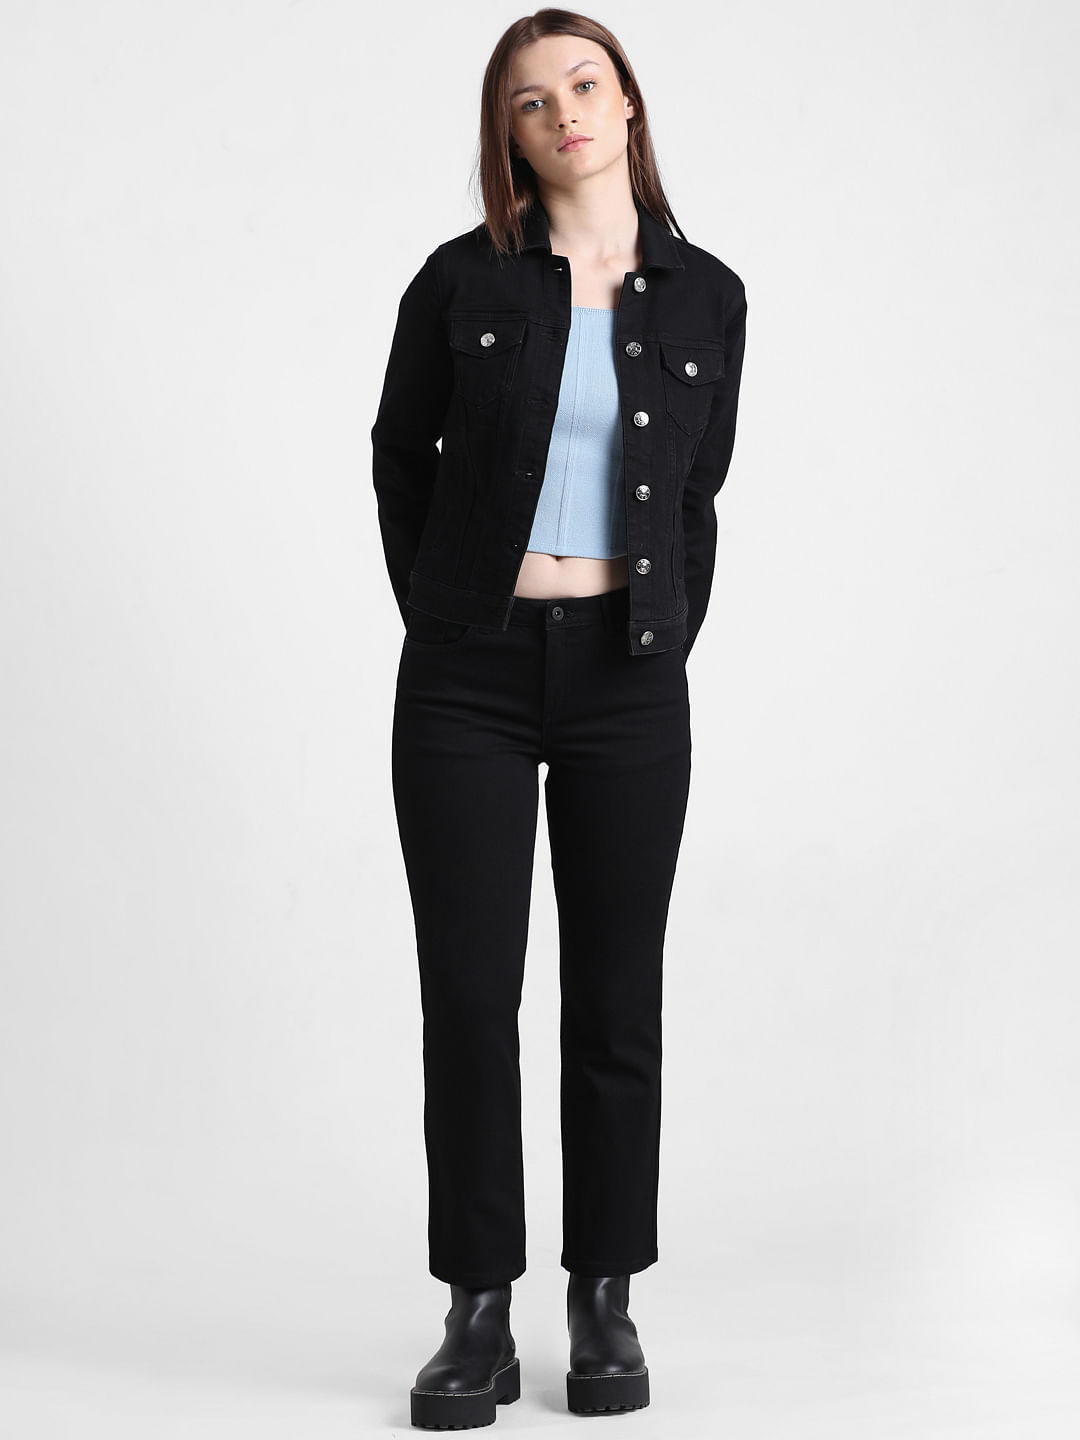 Acne Studios – Women's denim jackets